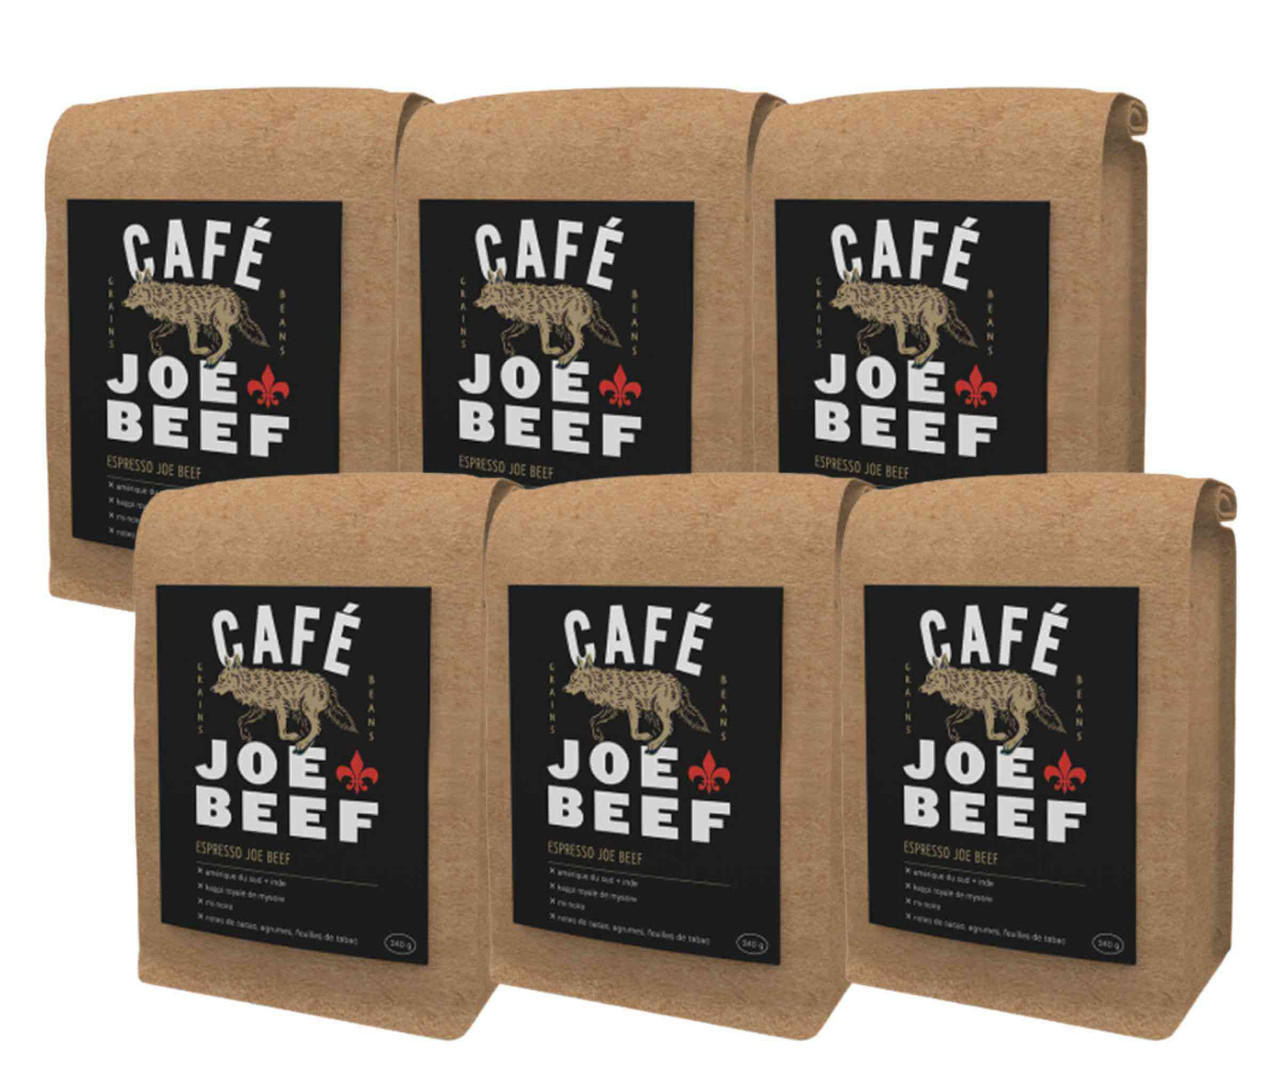  Café JOE BEEF Espresso Medium Roast Coffee Beans - 0.75 lbs / 0.34 kg Bag (6/Case) 